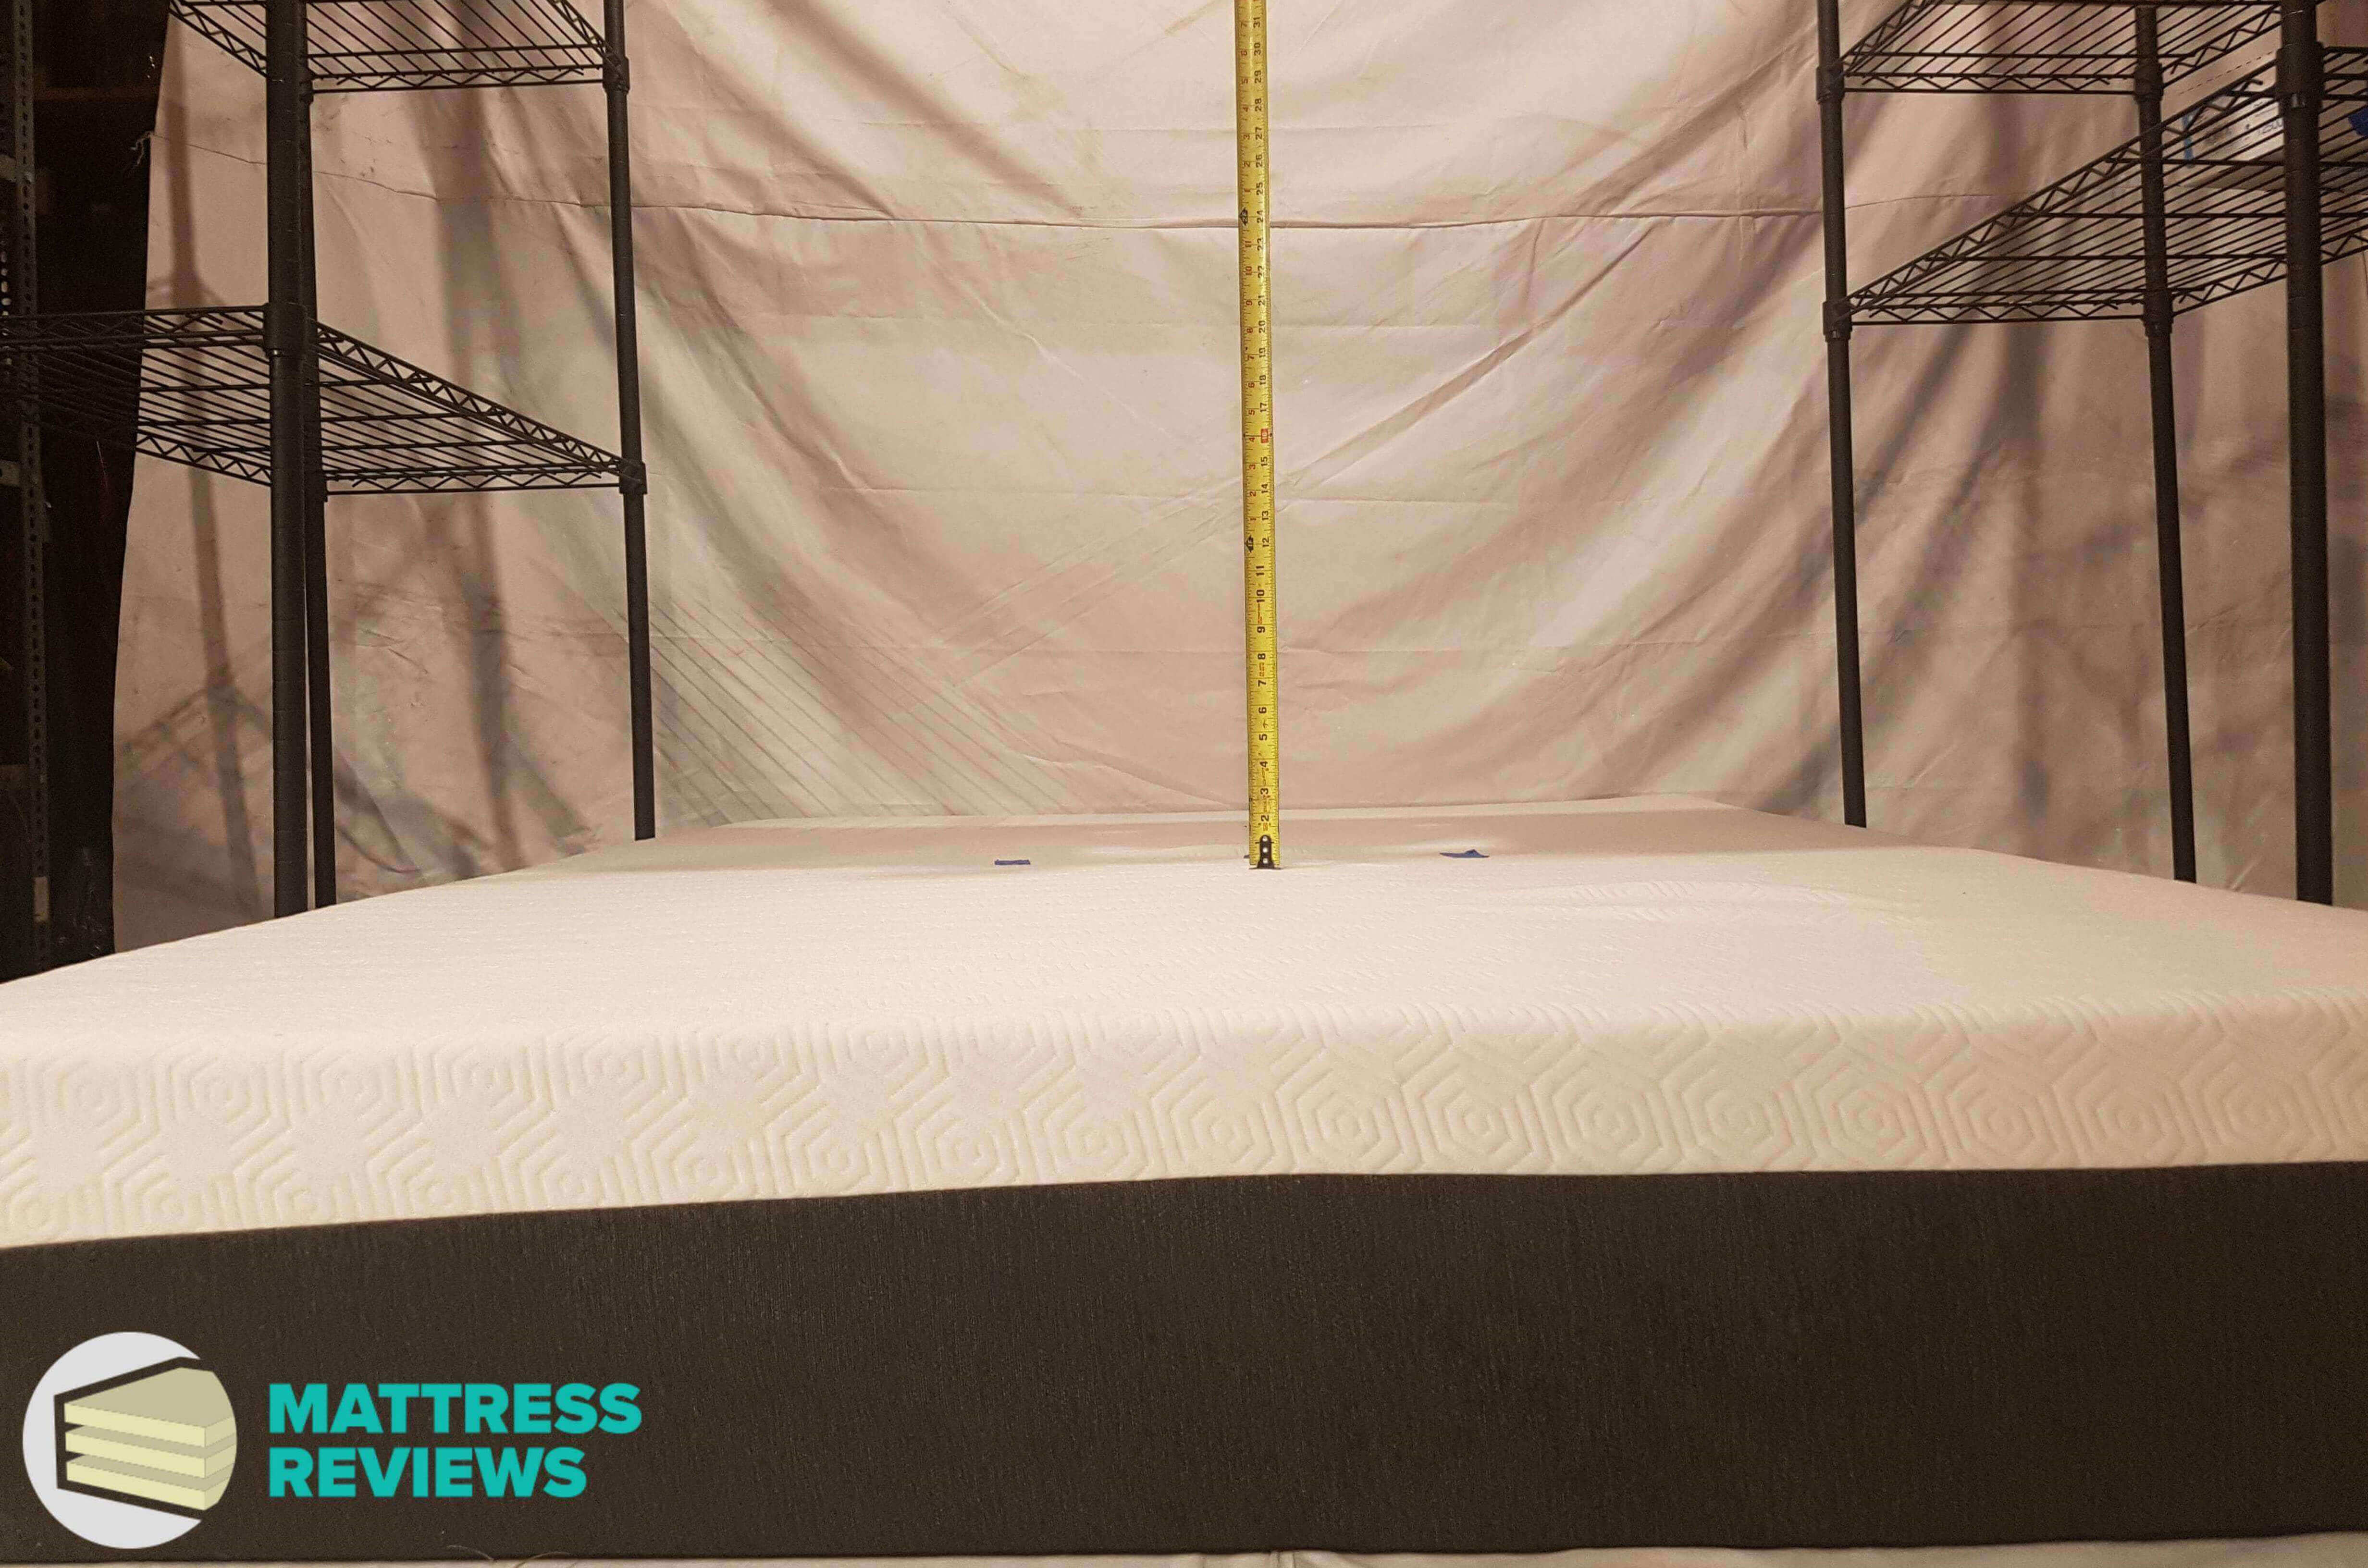 Image of the Bear mattress bounce test.